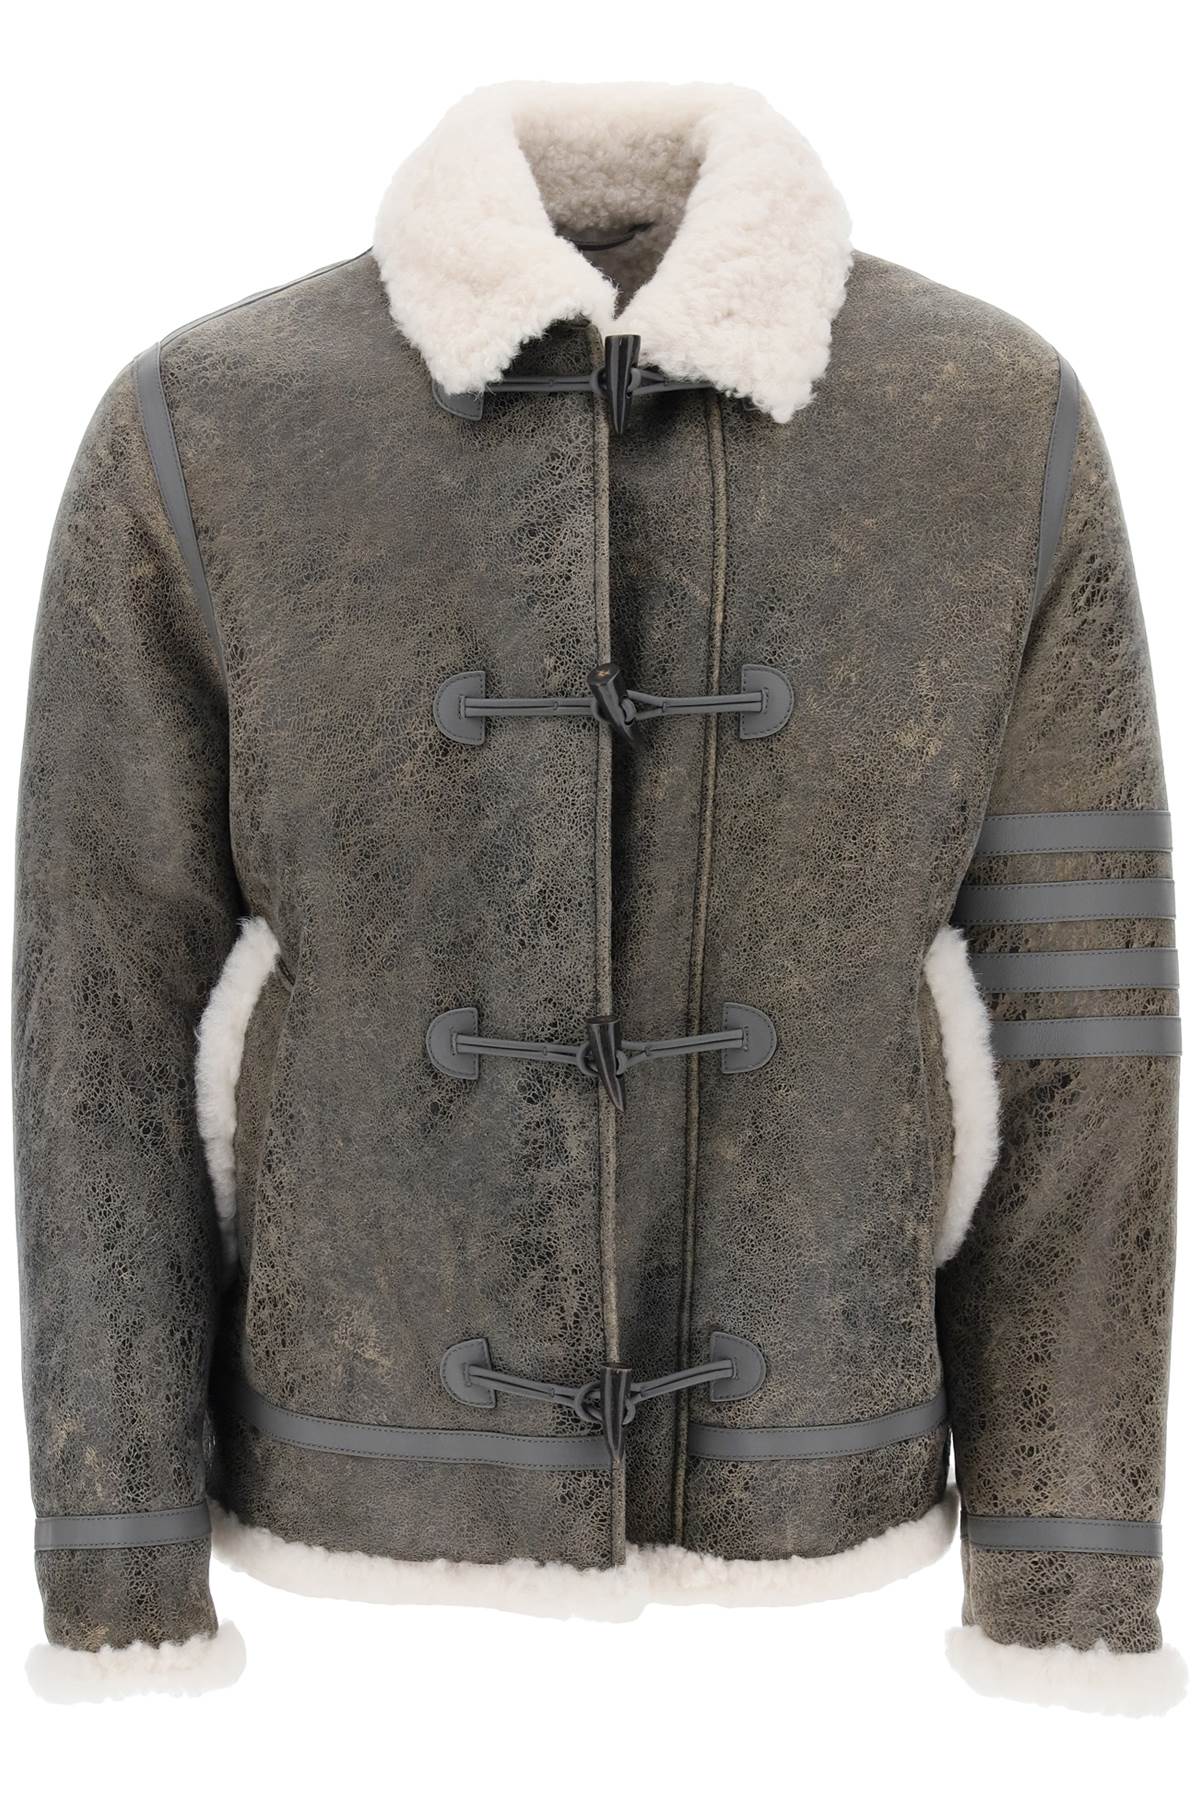 Thom Browne THOM BROWNE shearling cropped montgomery jacket